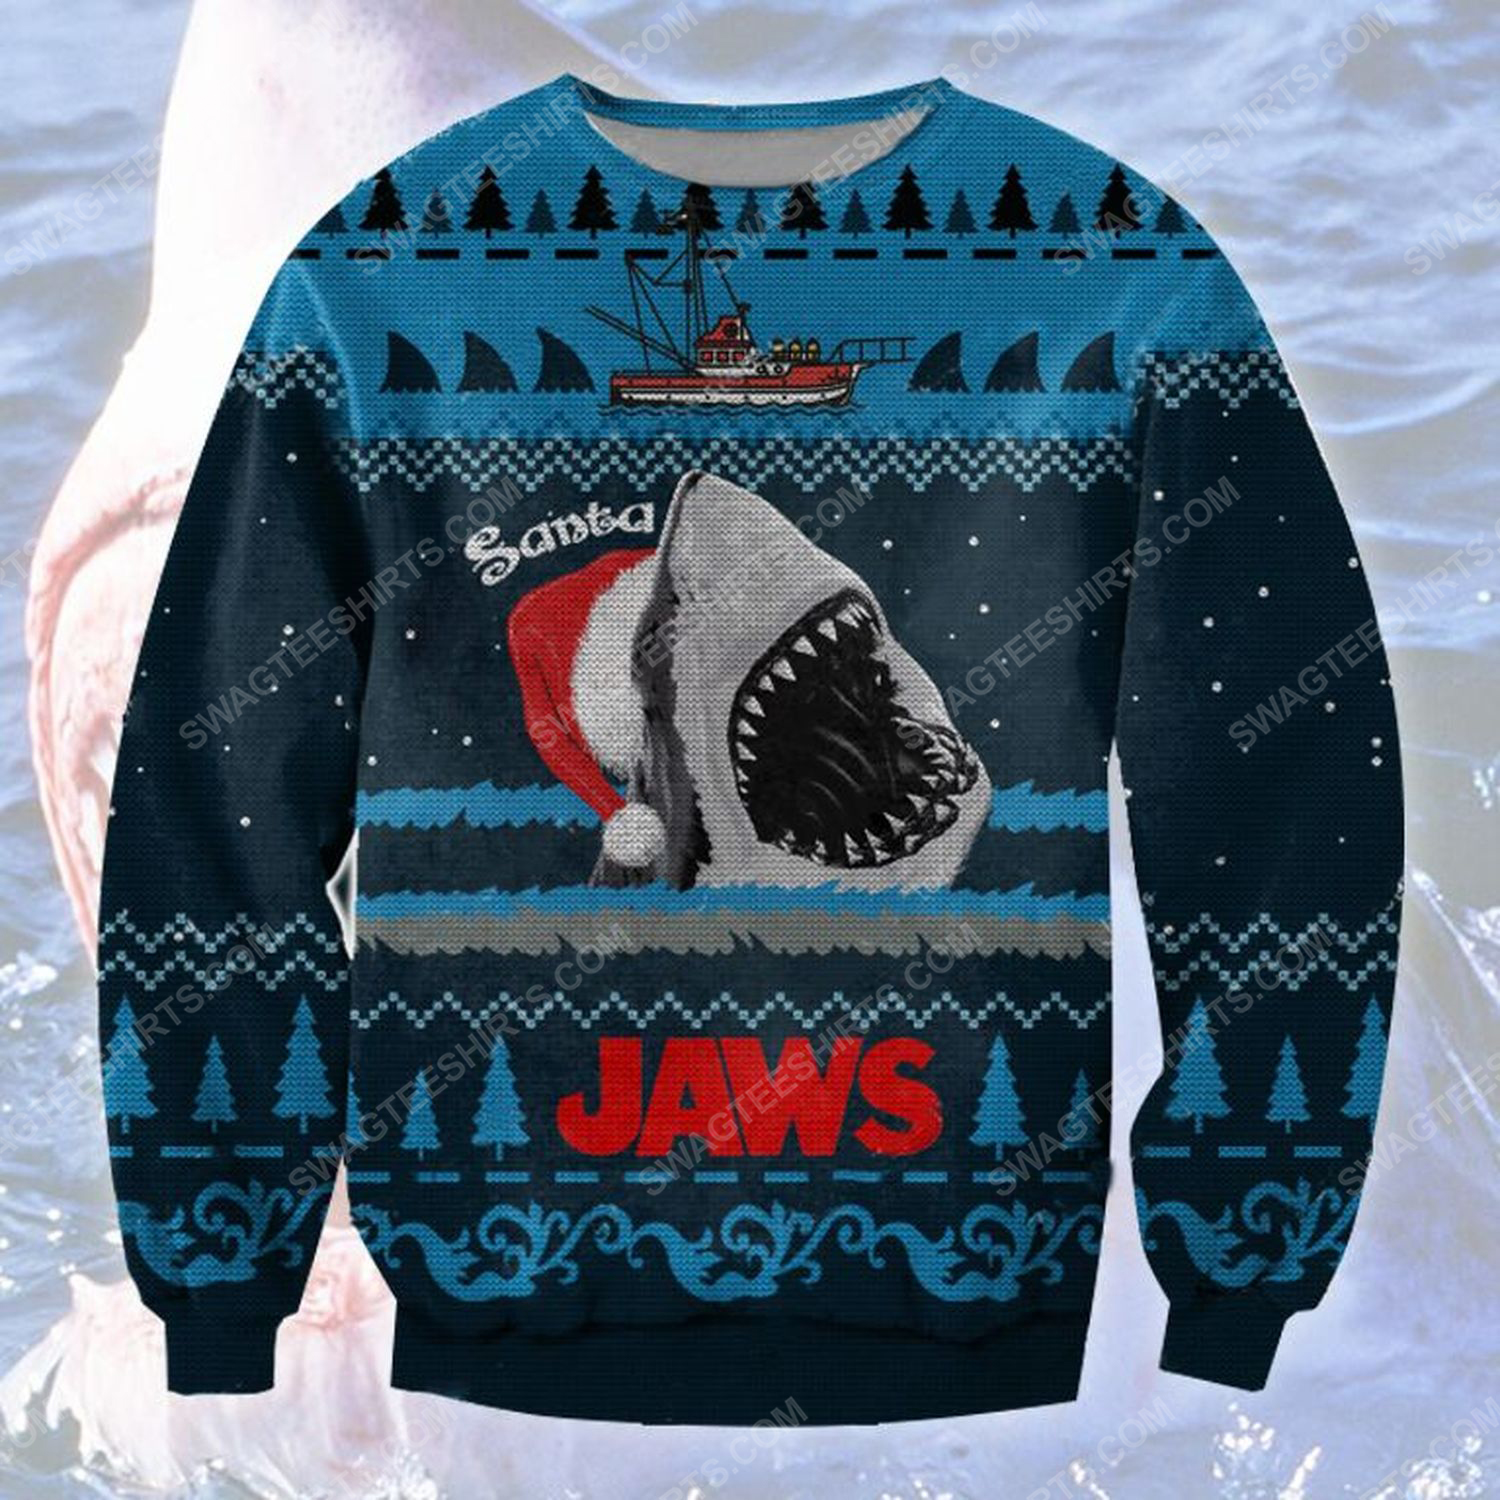 Santa jaws ugly christmas sweater - Copy